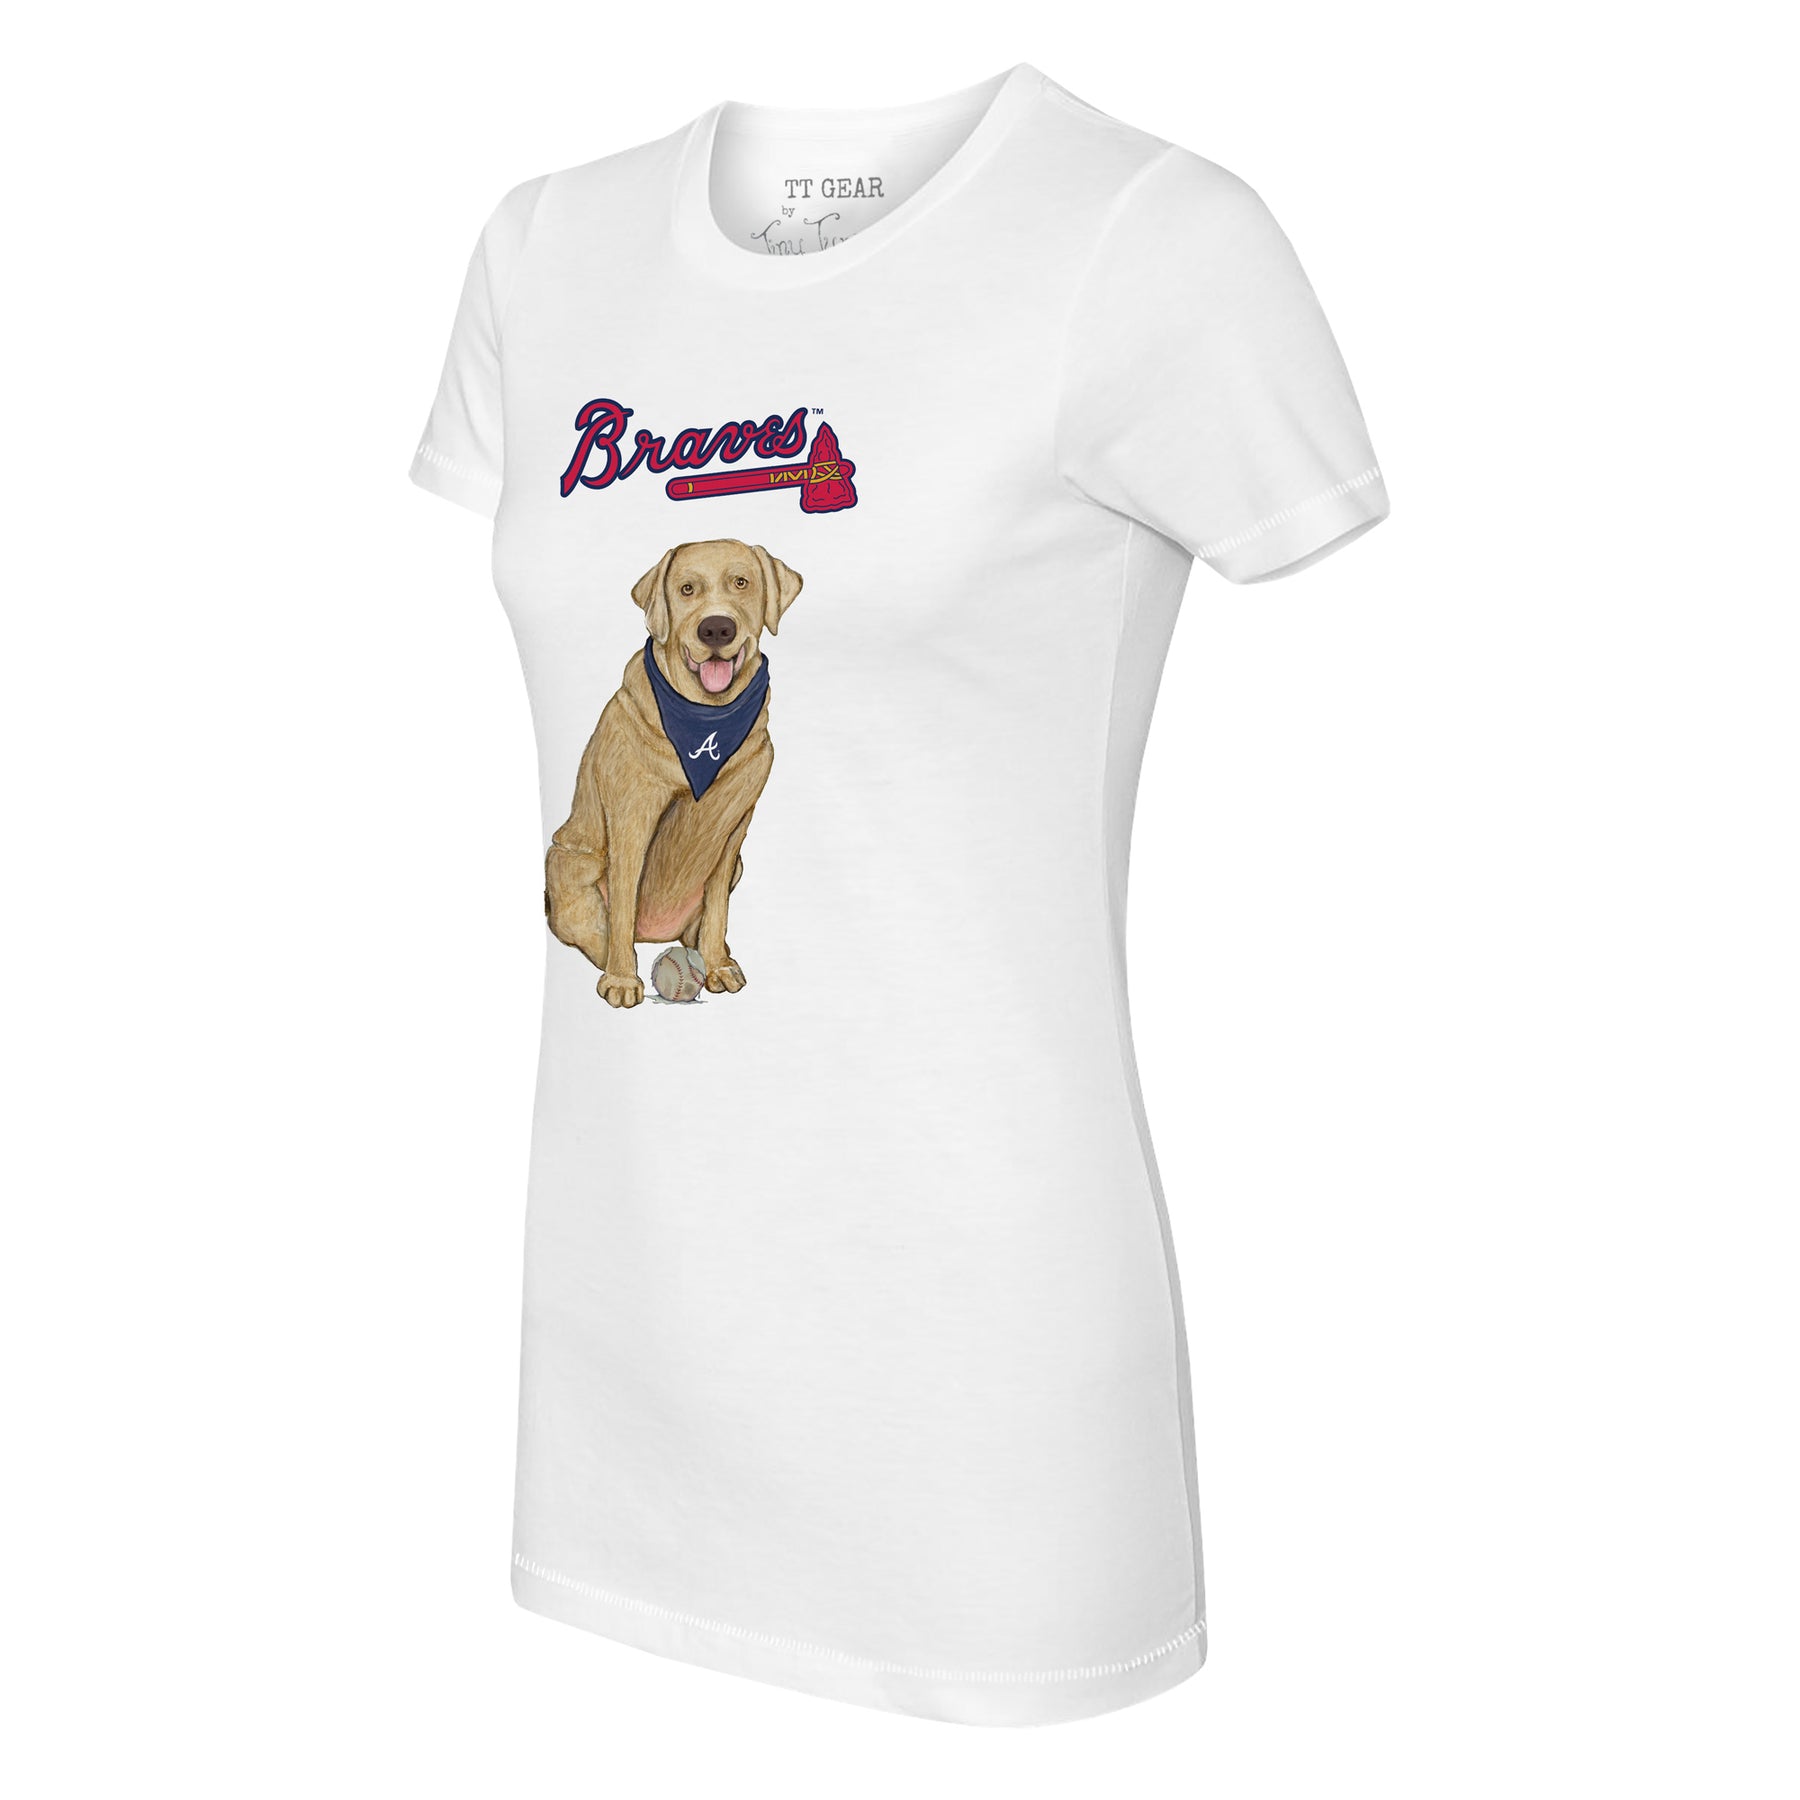 Atlanta Braves Yellow Labrador Retriever Tee Shirt